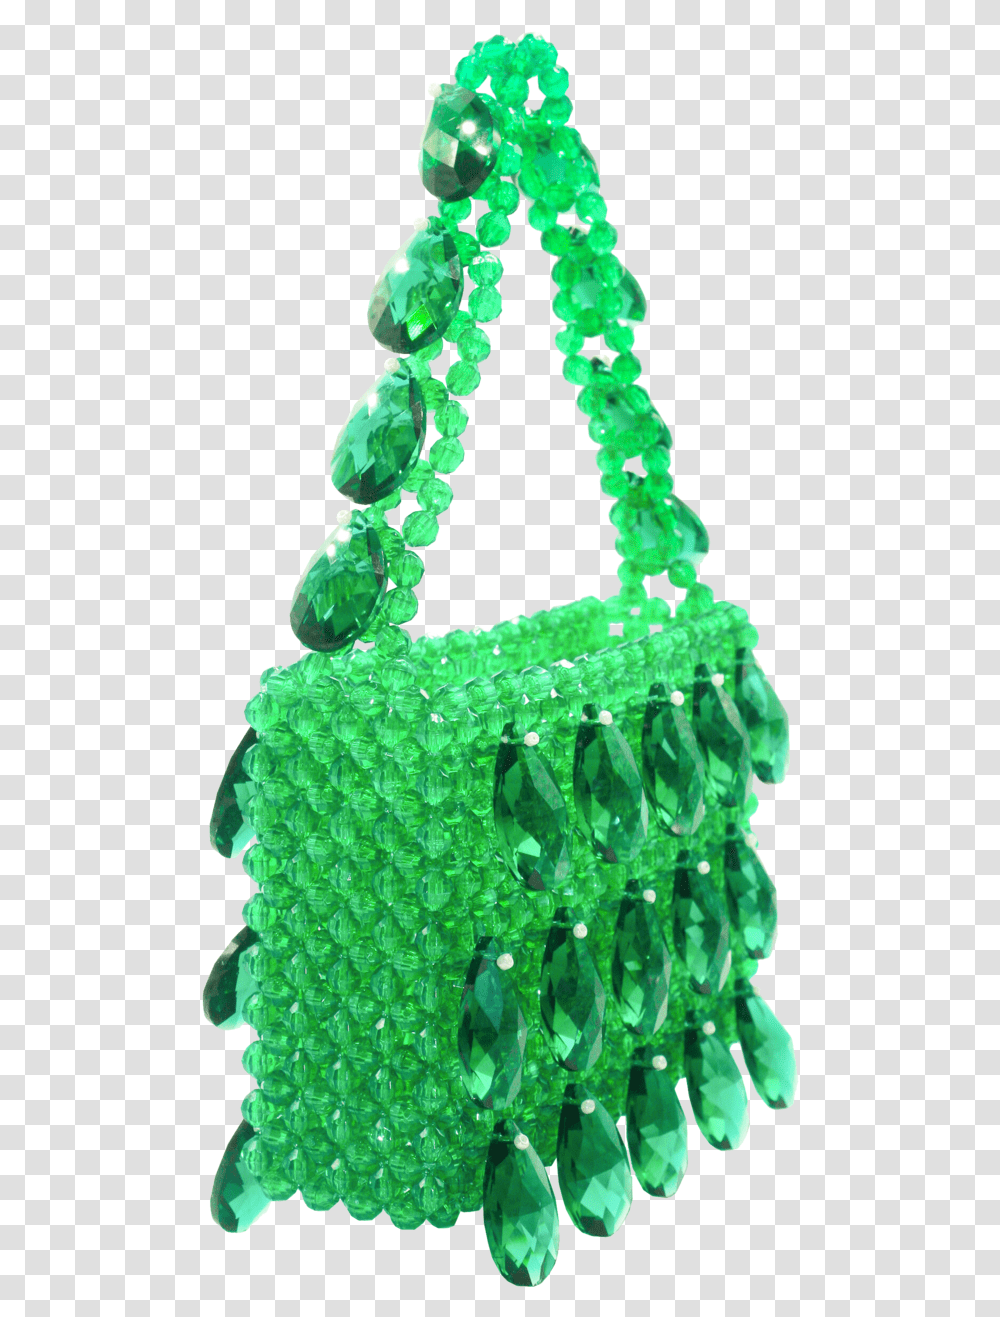 Emerald City Bag Handbag, Accessories, Accessory, Purse, Pineapple Transparent Png